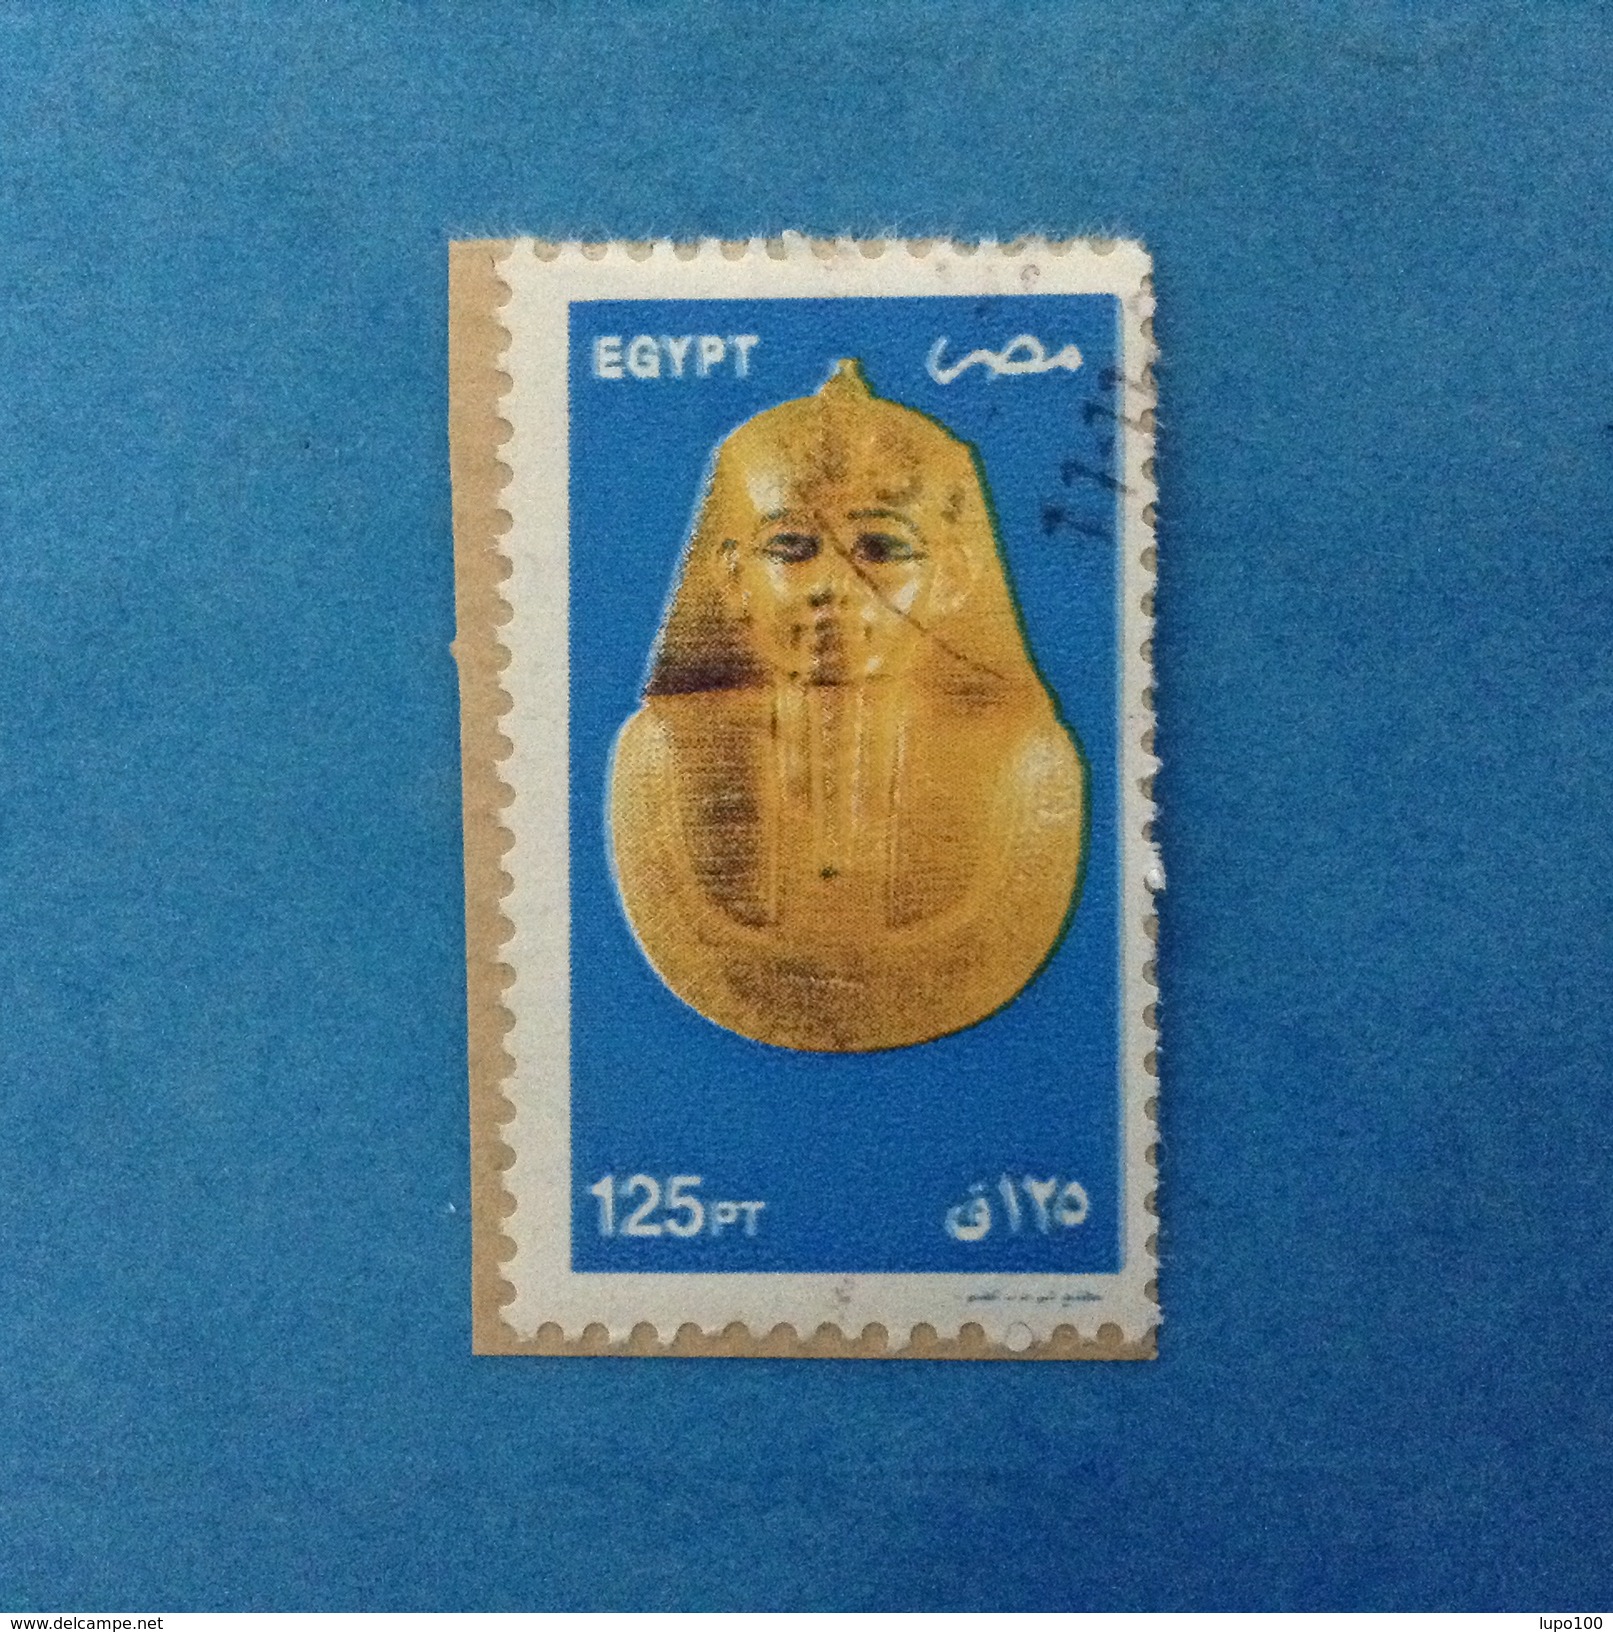 2002 EGITTO EGYPT FRANCOBOLLO USATO STAMP USED - MASCHERA FARAONE 125 - Usados